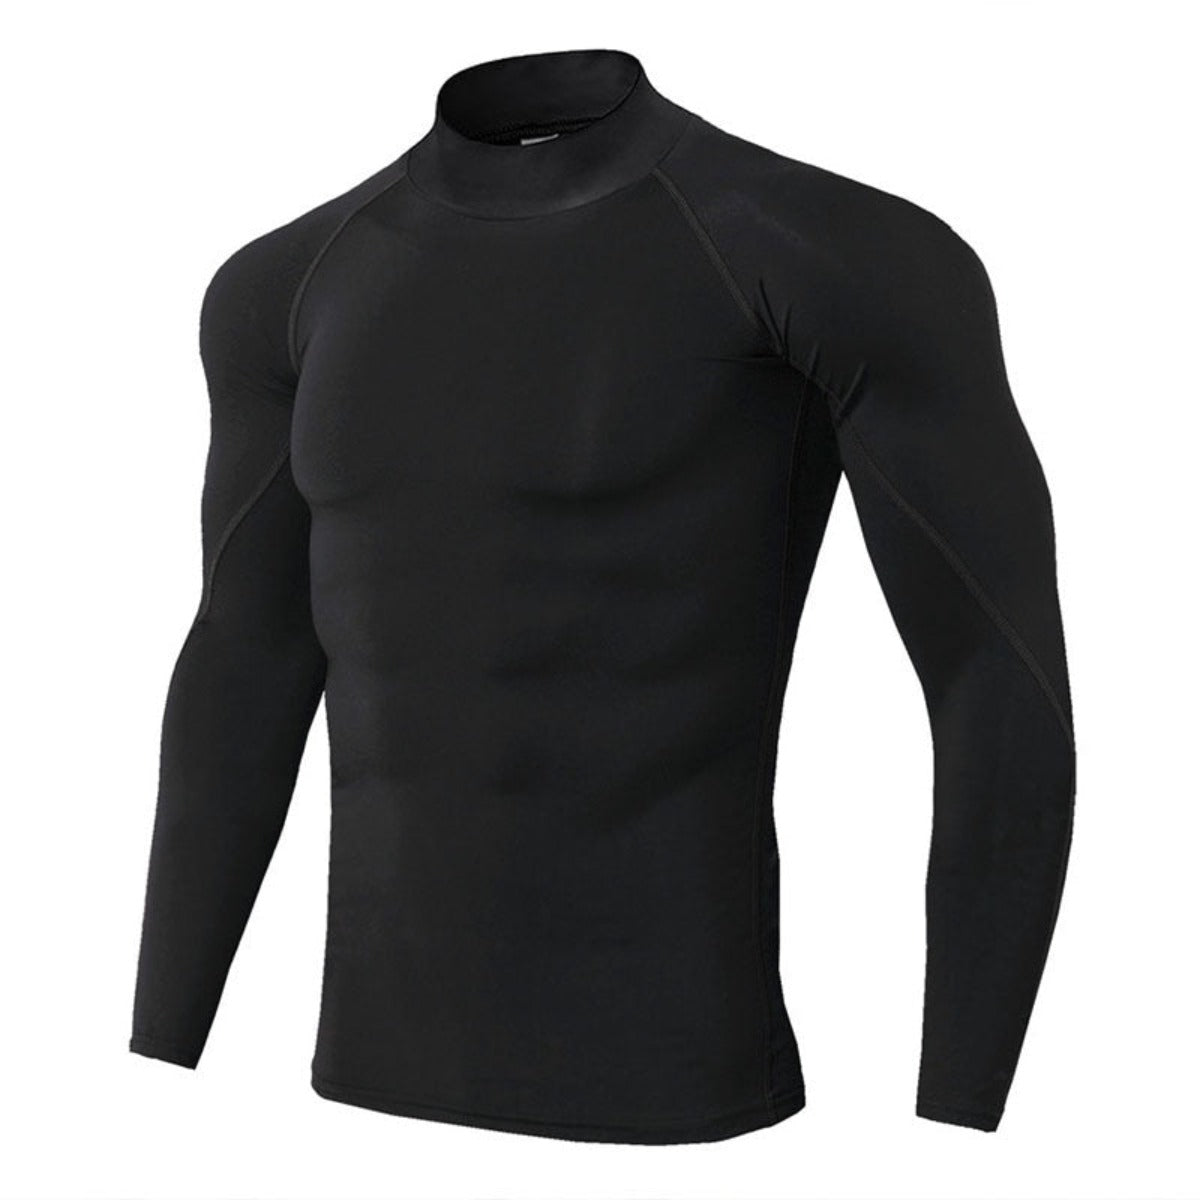 Men's Quick Dry Thermal Underwear - Black